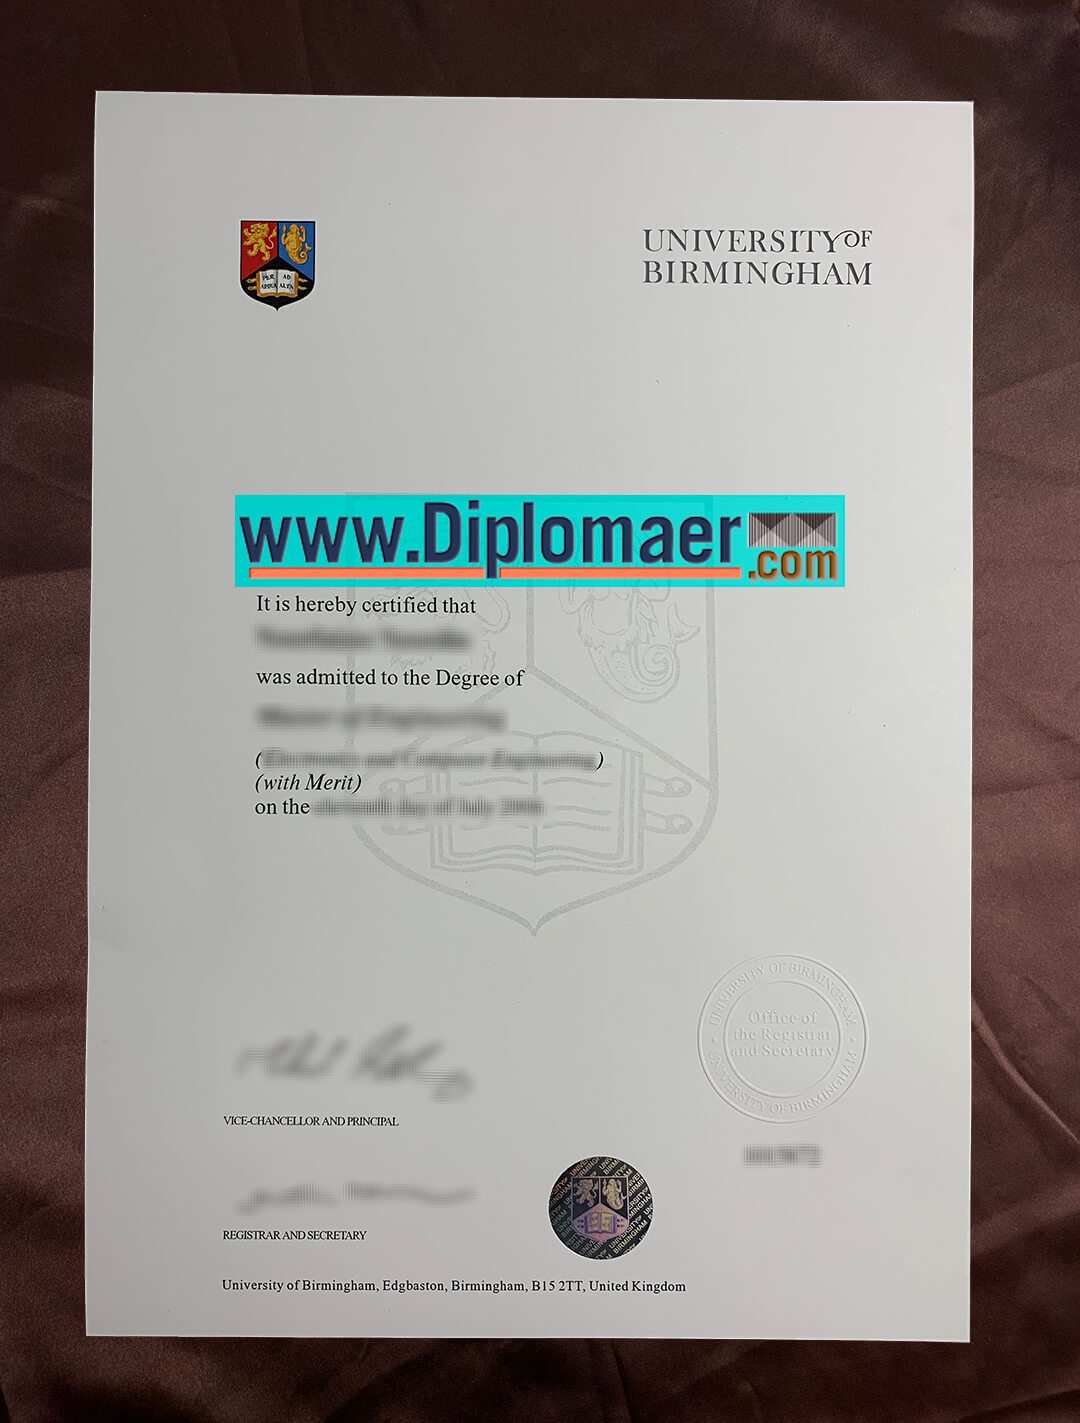 University of Birmingham Fake Diploma 1 - Can I Get a University of Birmingham Degree? Buy the University of Birmingham Fake Diplomas.